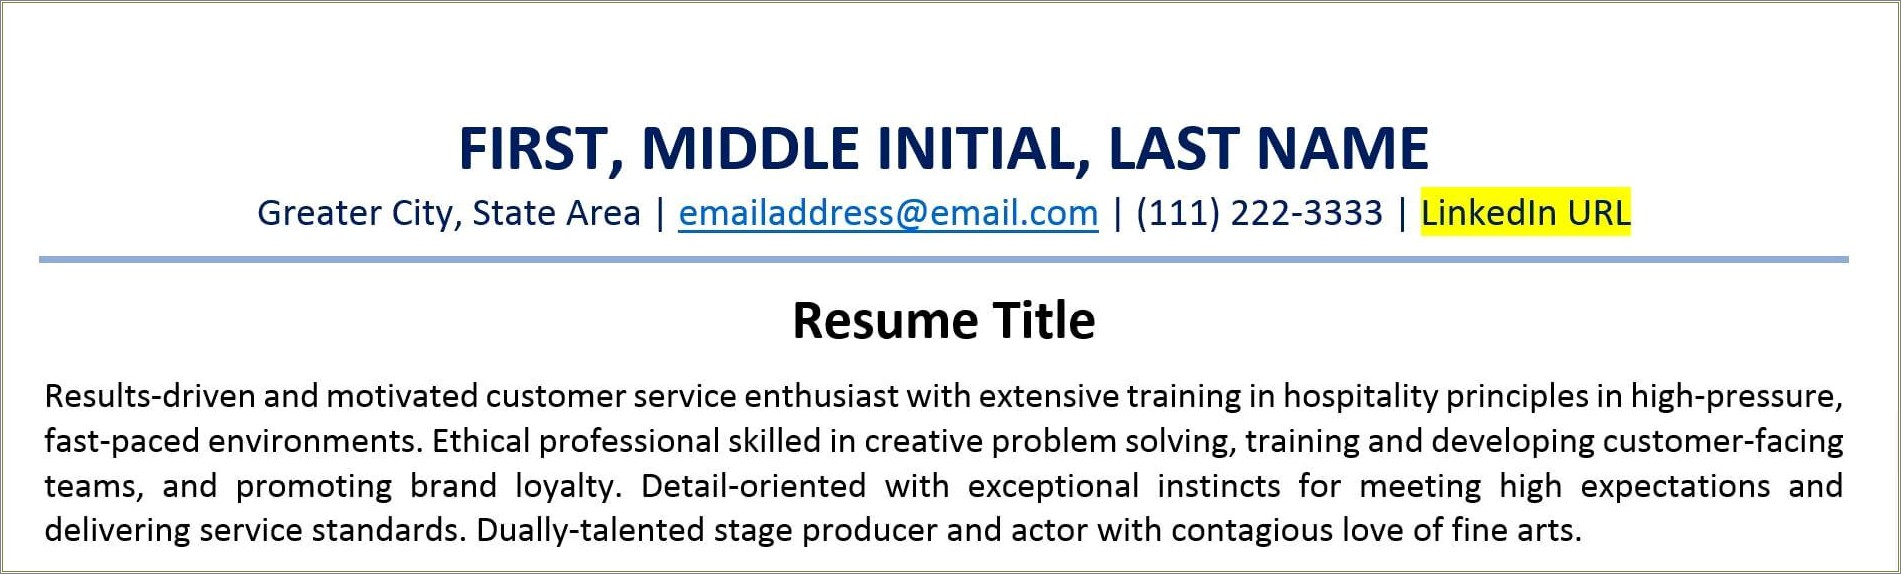 Resume Example For Railroad Job Career Change